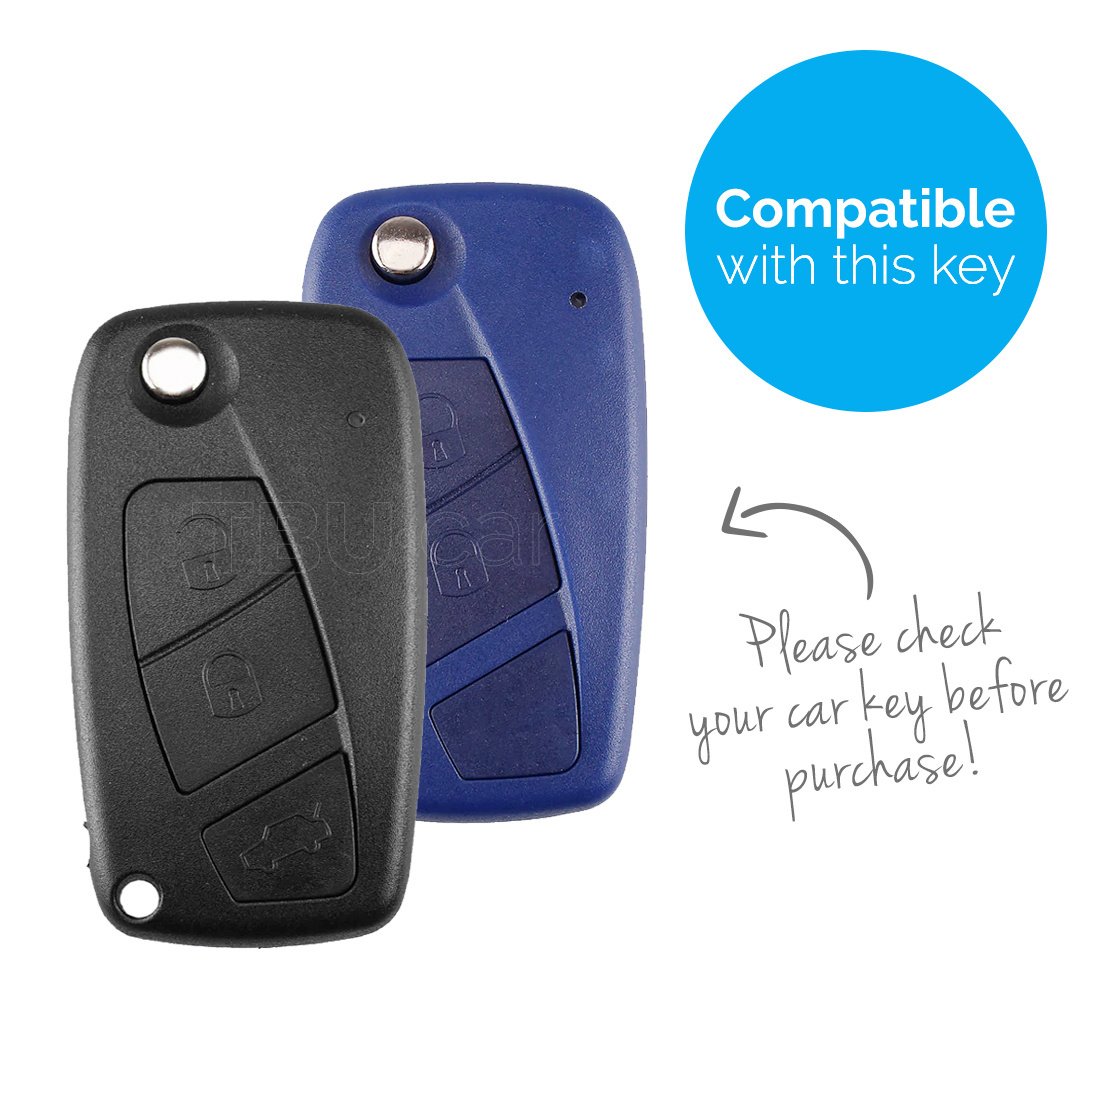 TBU car Autoschlüssel Hülle kompatibel mit Fiat 3 Tasten - Schutzhülle aus  Silikon - Auto Schlüsselhülle Cover in Blau